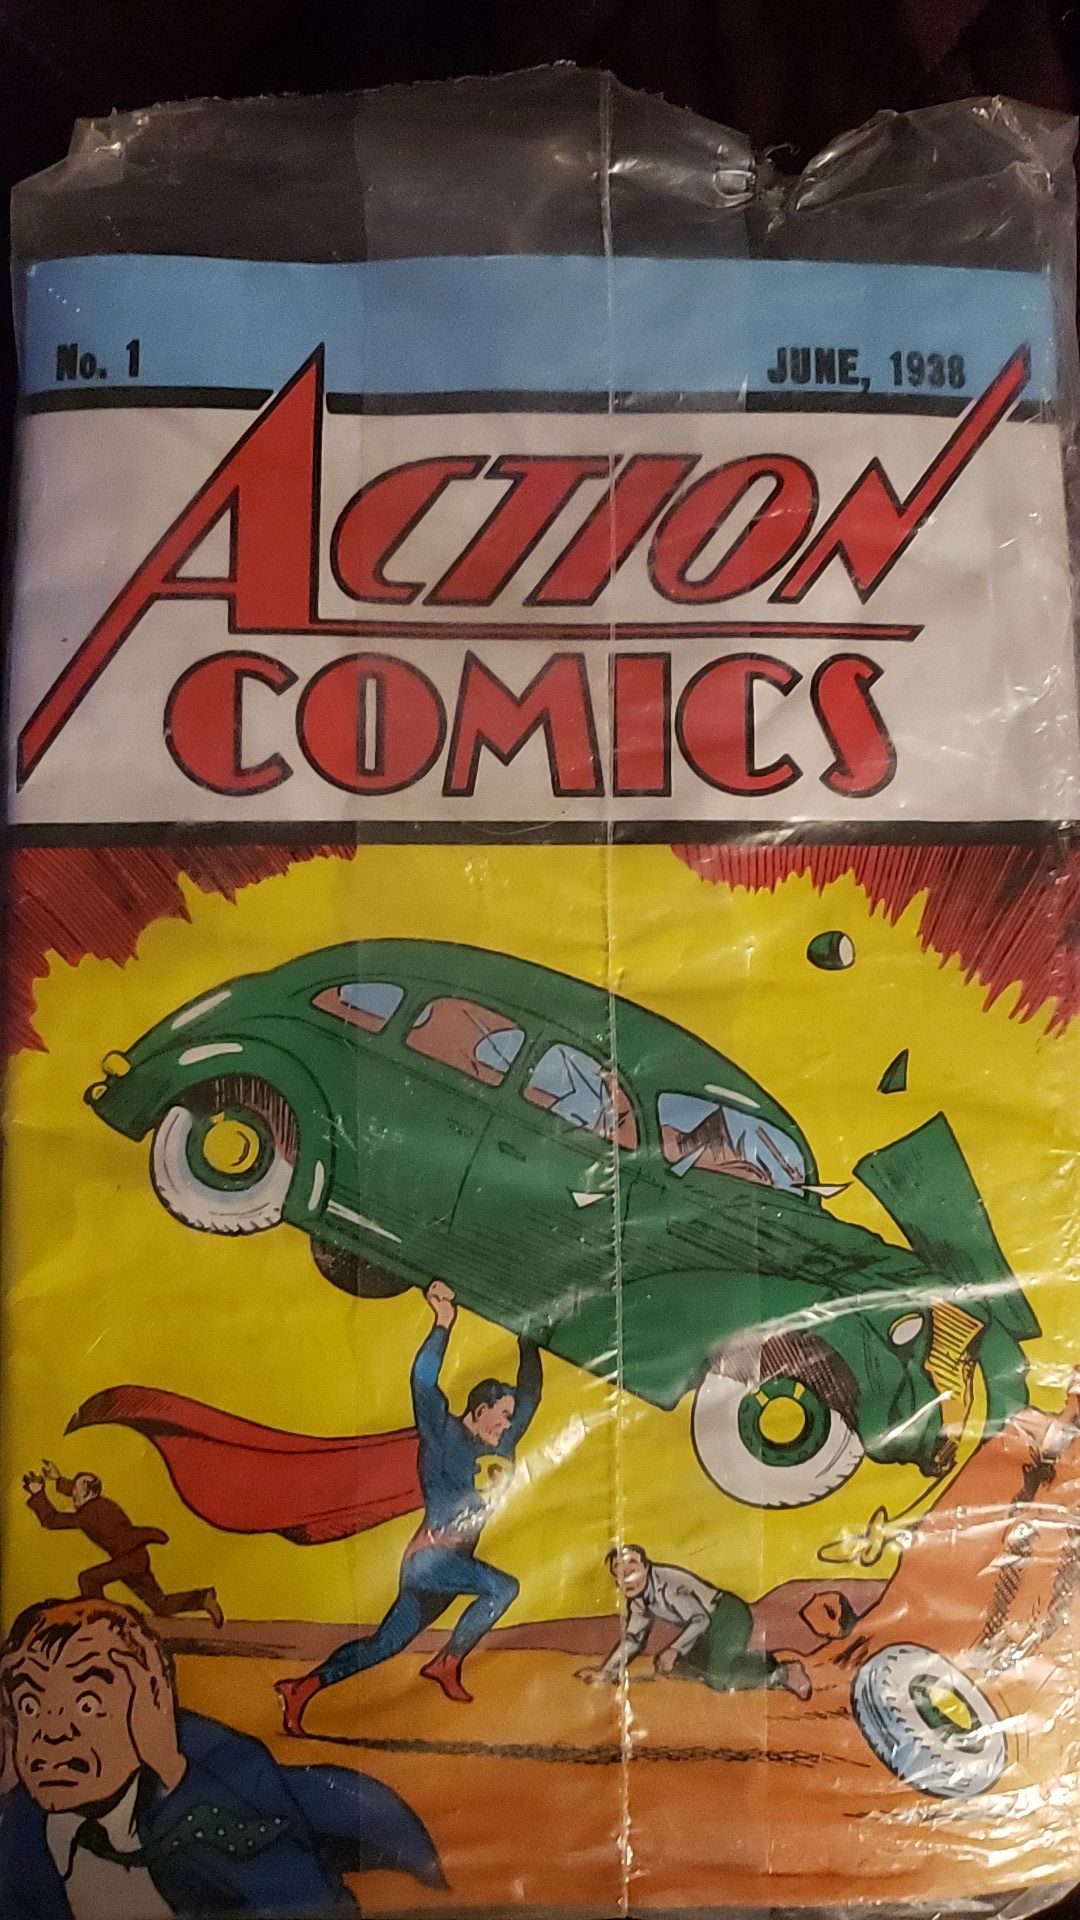 Number 1 June 1938 action comics